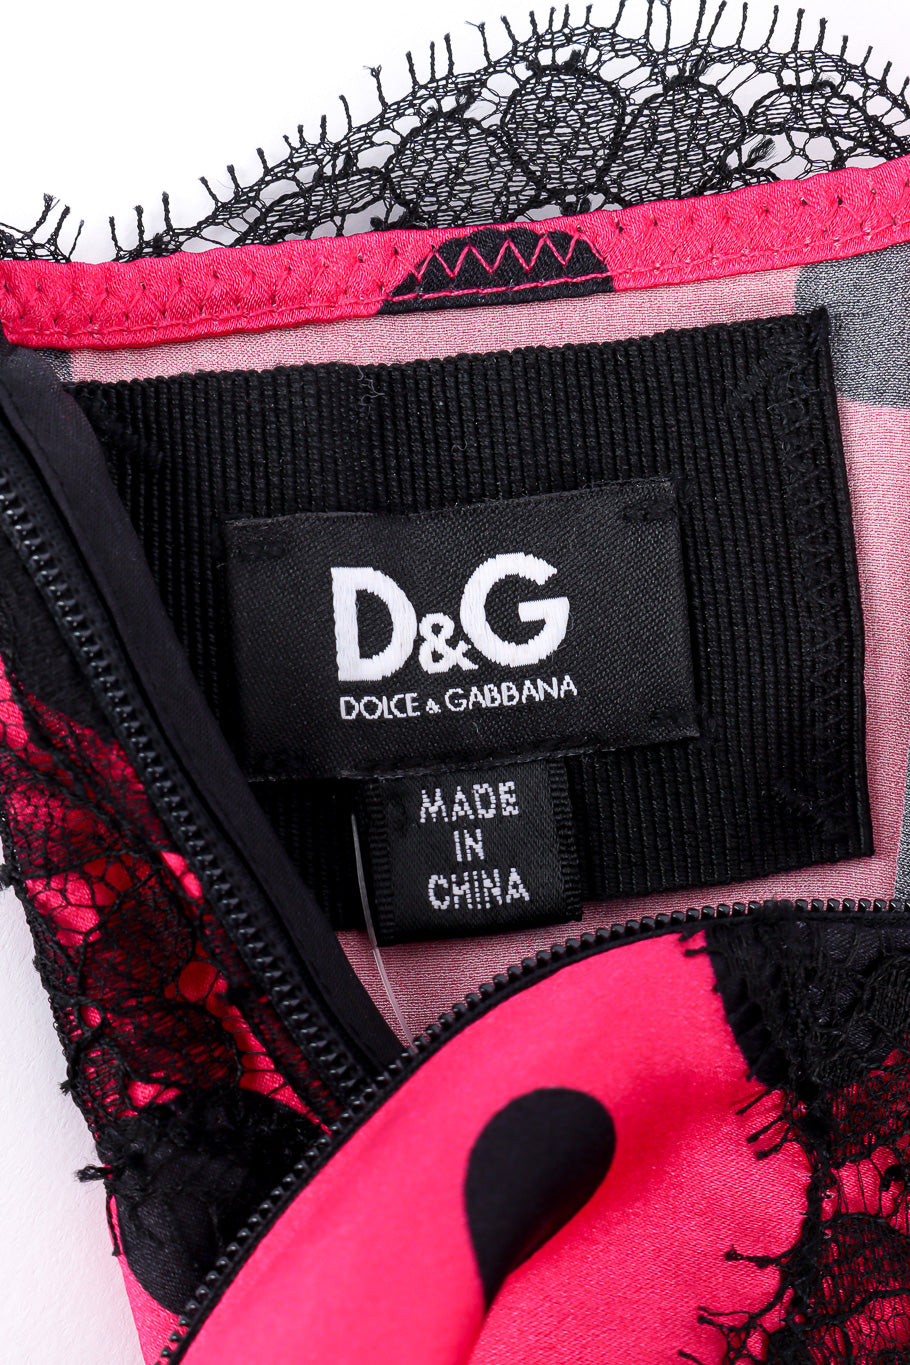 Lace trim camisole by Dolce & Gabbana label  @recessla